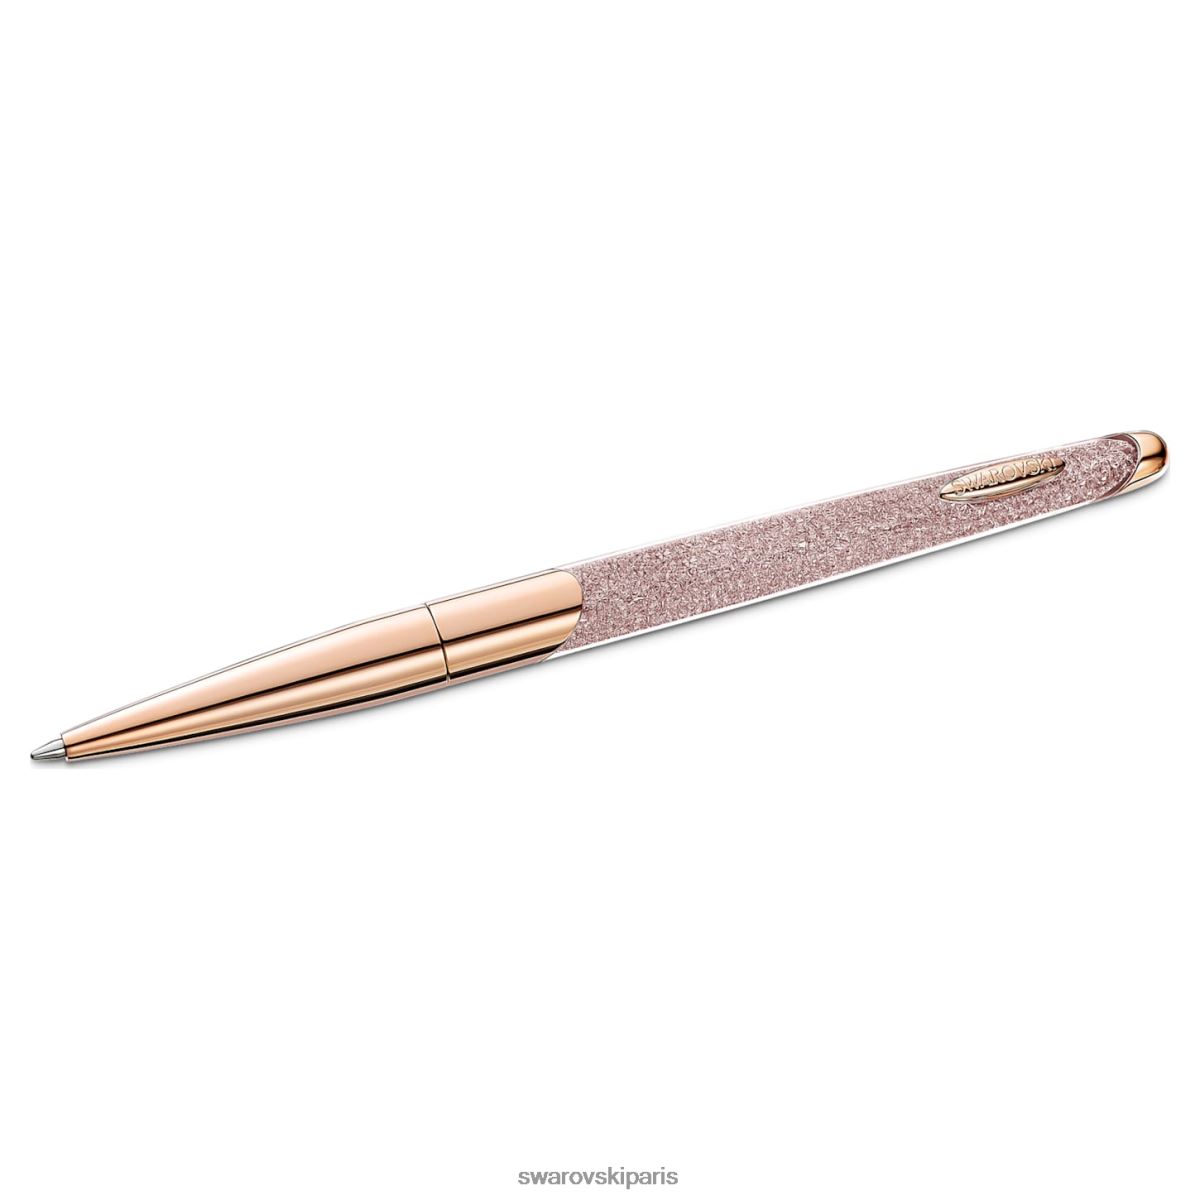 accessoires Swarovski stylo à bille cristallin nova ton or rose, plaqué ton or rose RZD0XJ1288